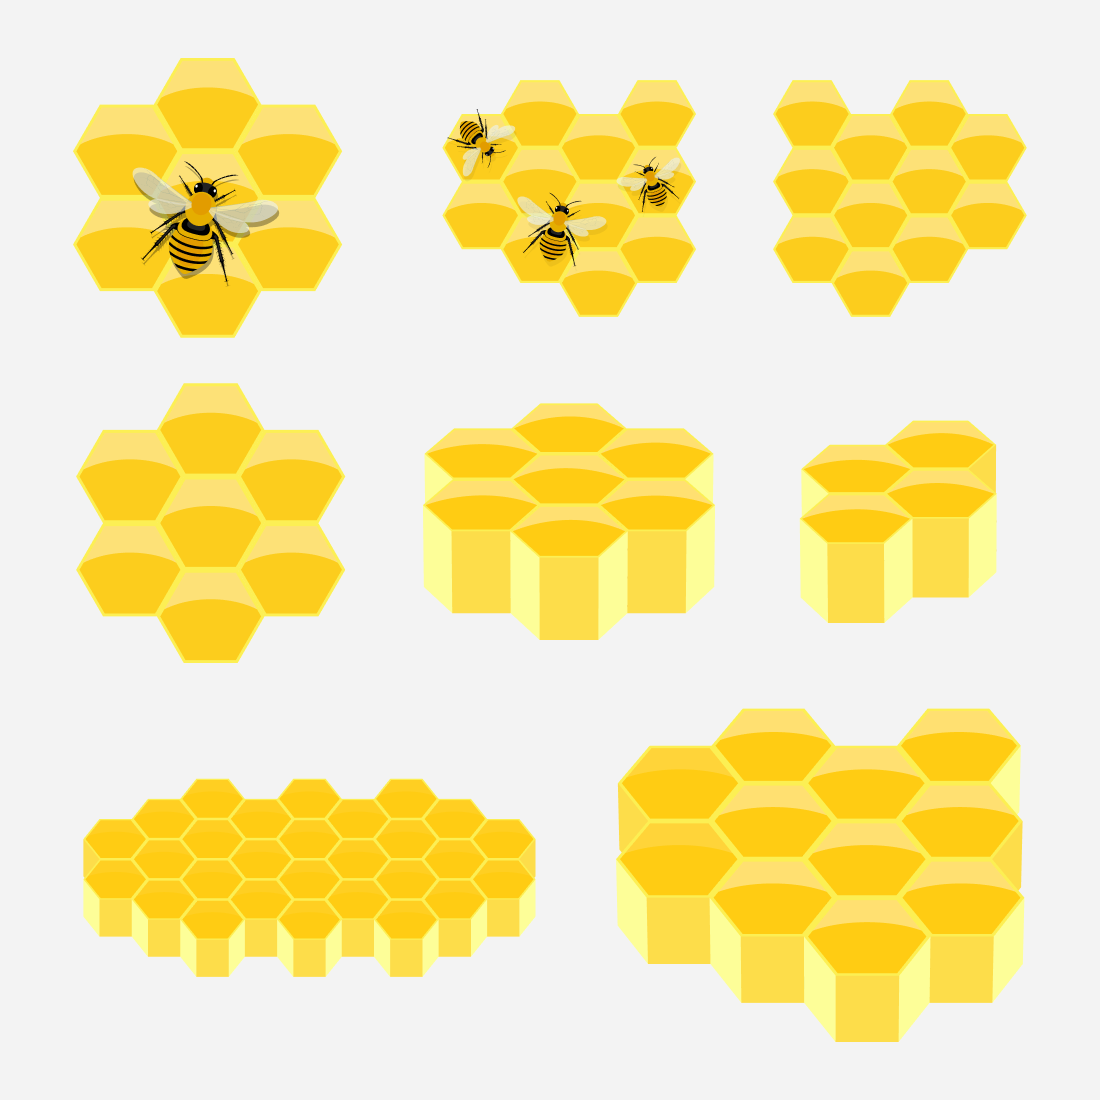 Honeycomb SVG bundle.